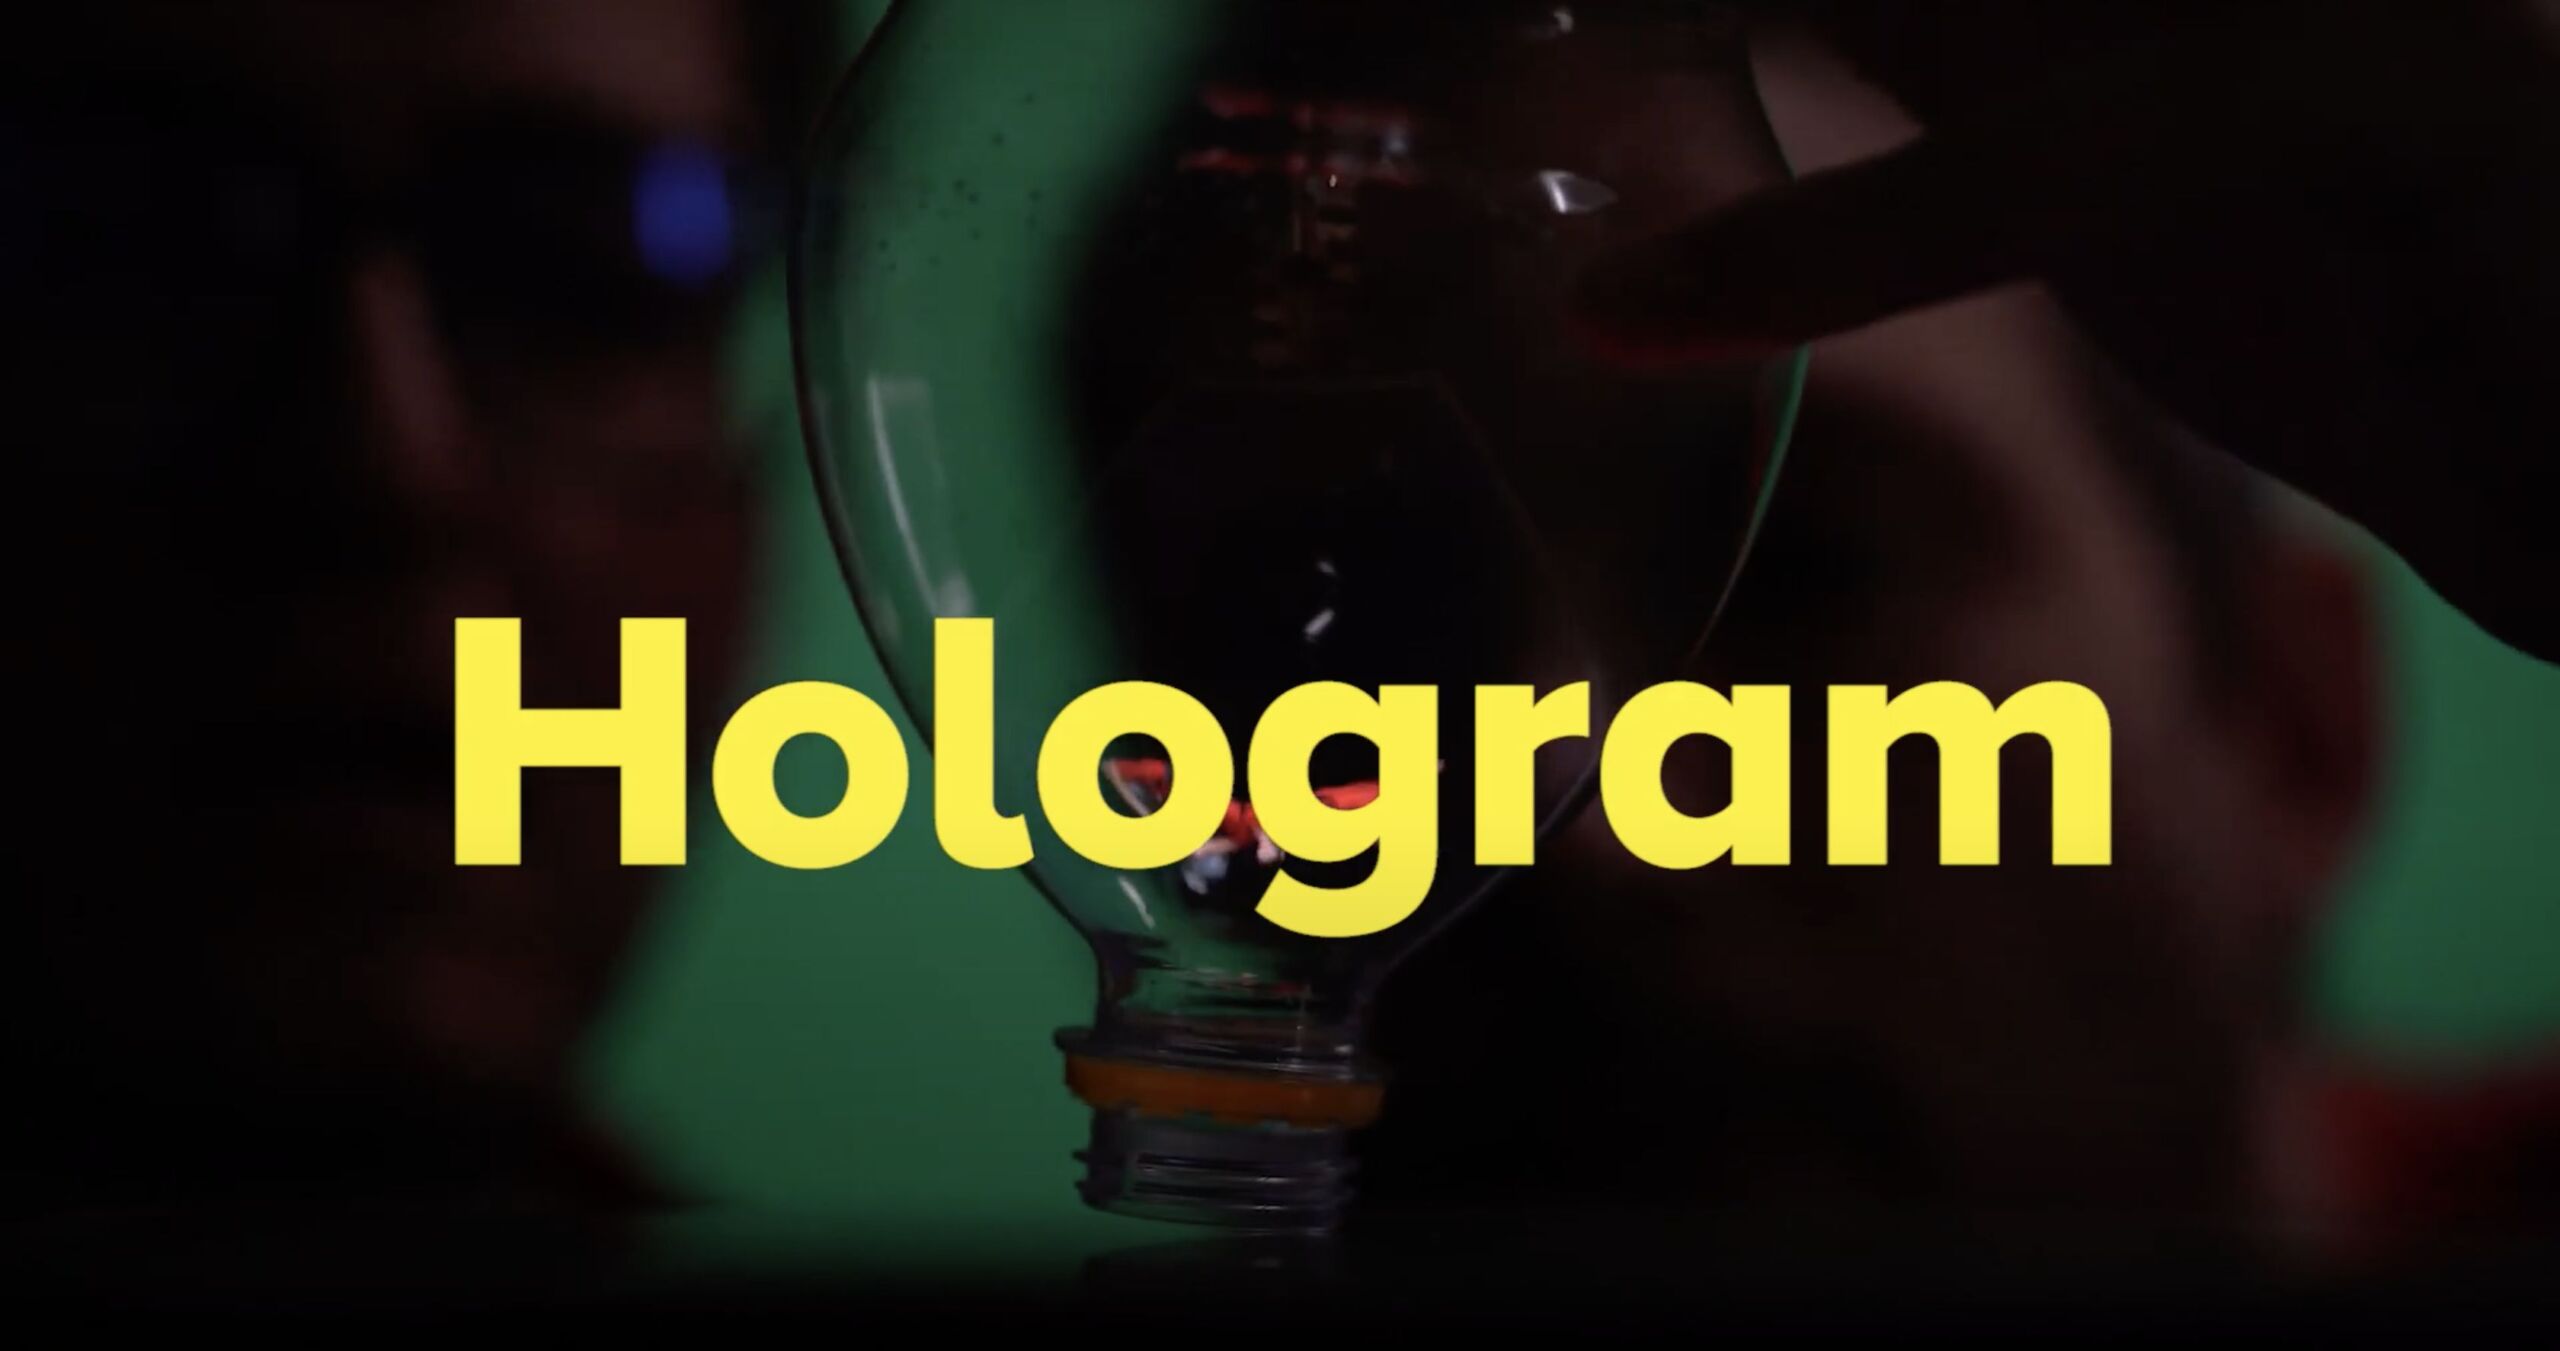 Hemmelighed Philadelphia apologi Hologram - Testoteket